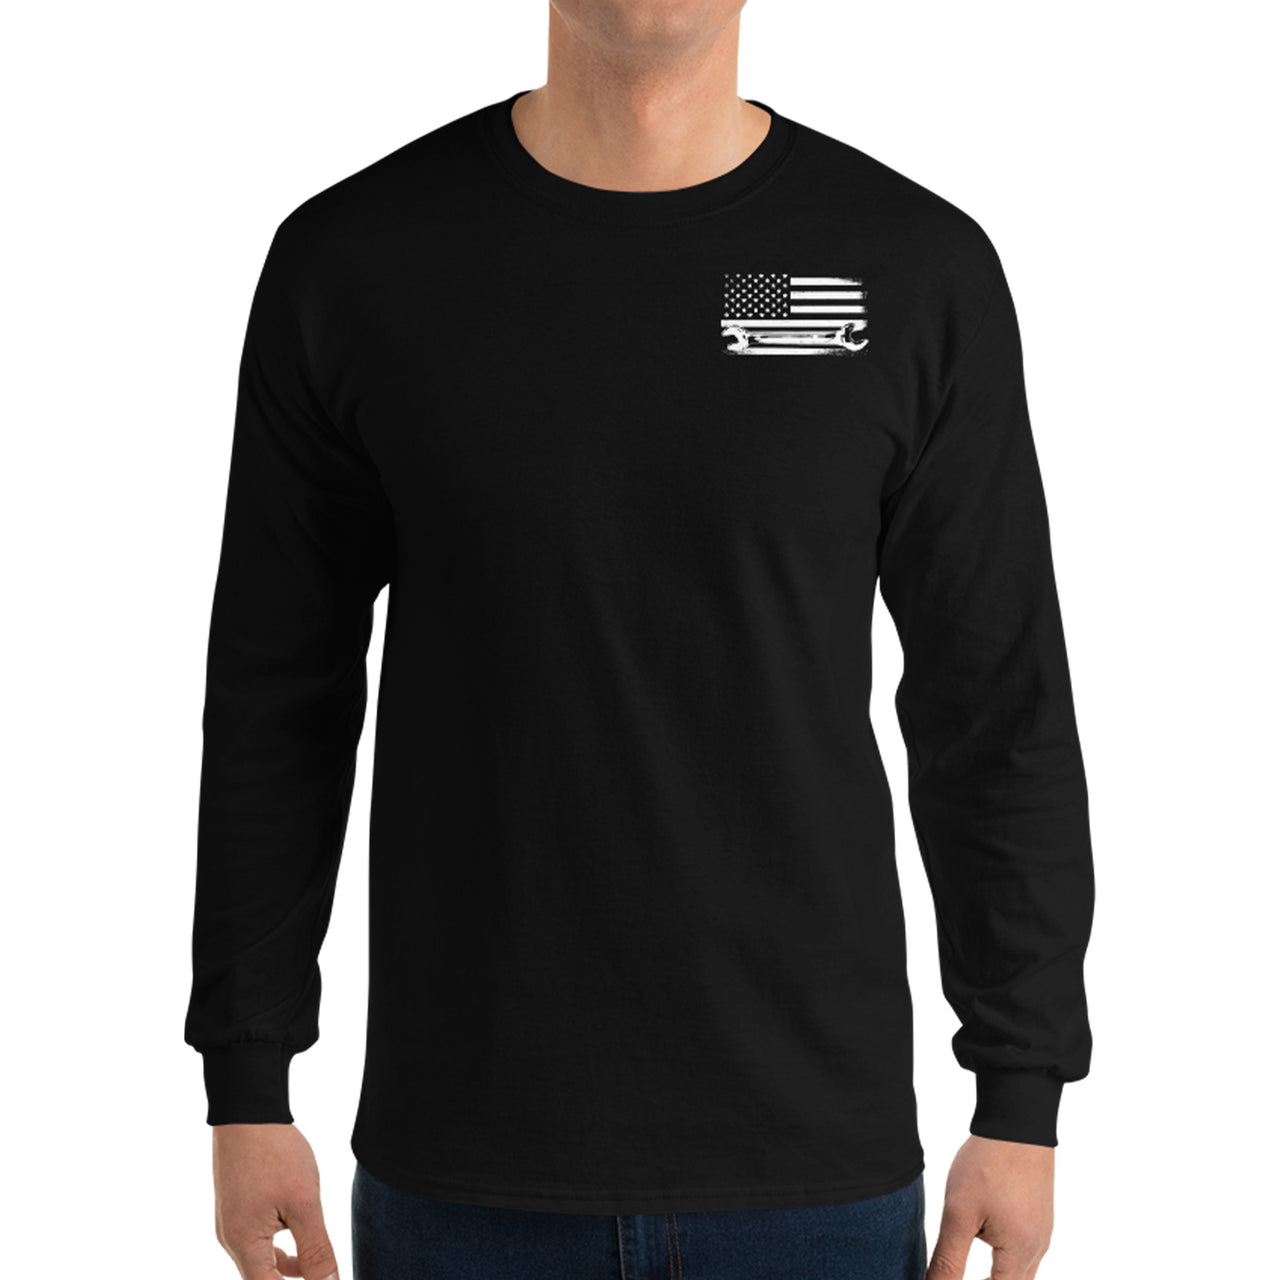 Diesel Mechanic American Flag Long Sleeve T-Shirt modeled in black front view